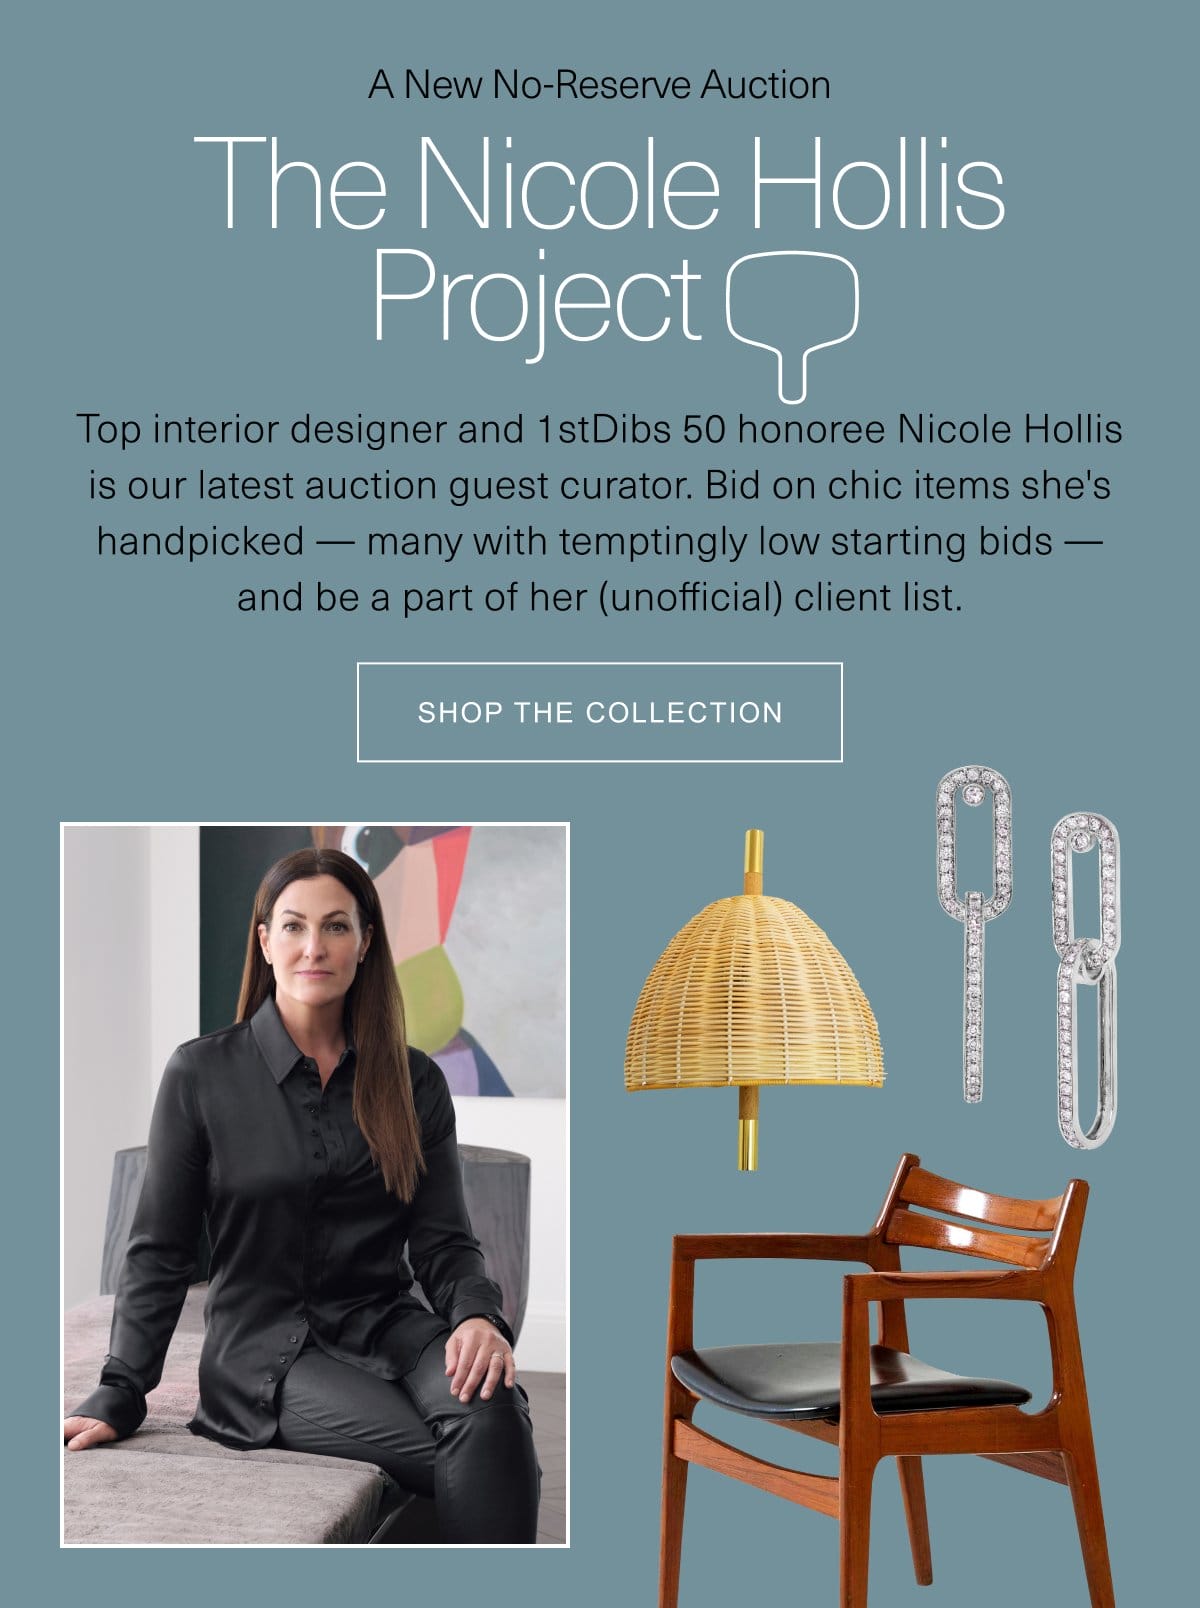 The Nicole Hollis Project